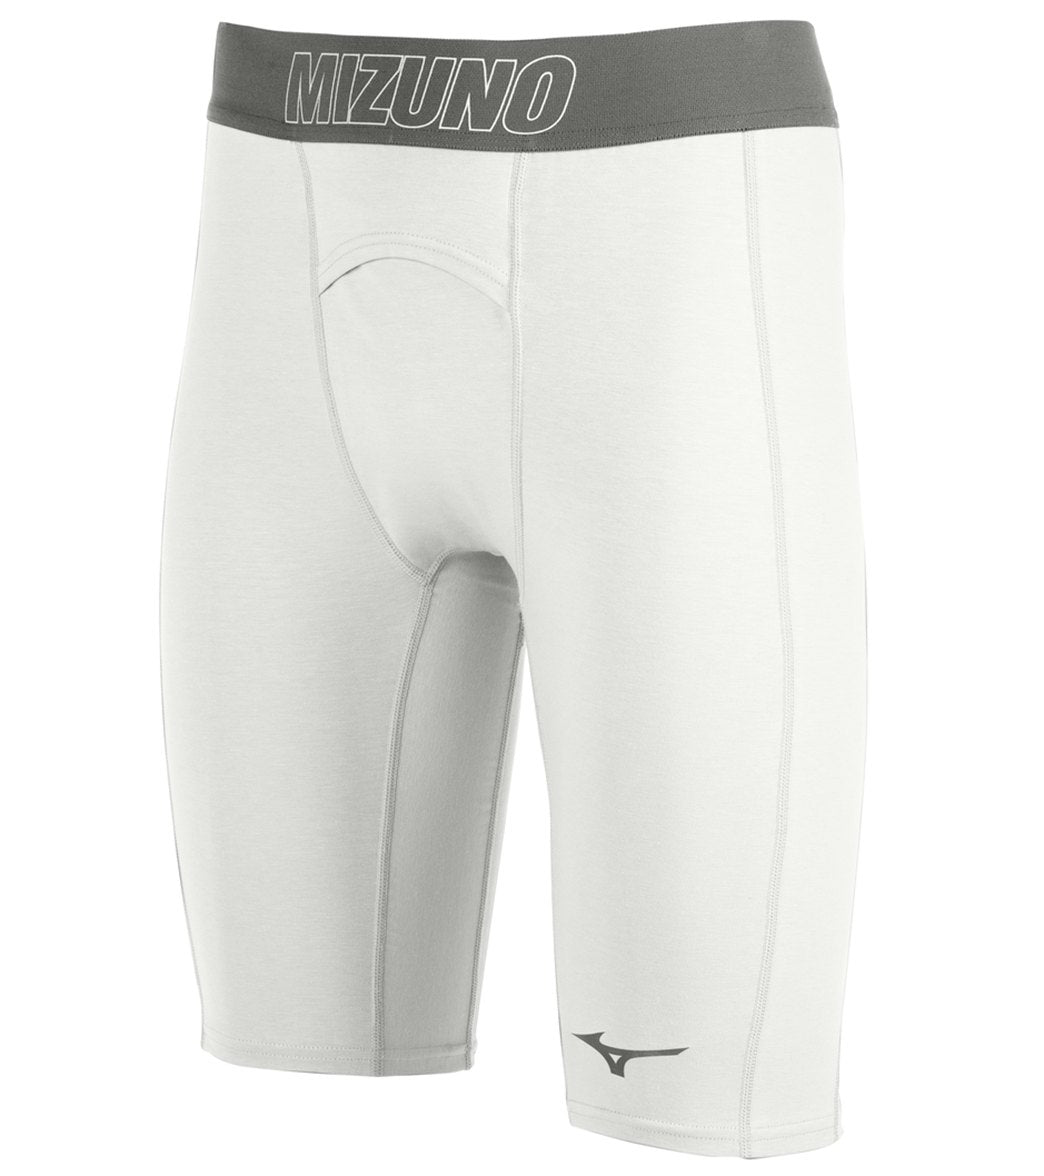 Mizuno Men's The Arrival Compression Short - White Large Cotton/Polyester - Swimoutlet.com